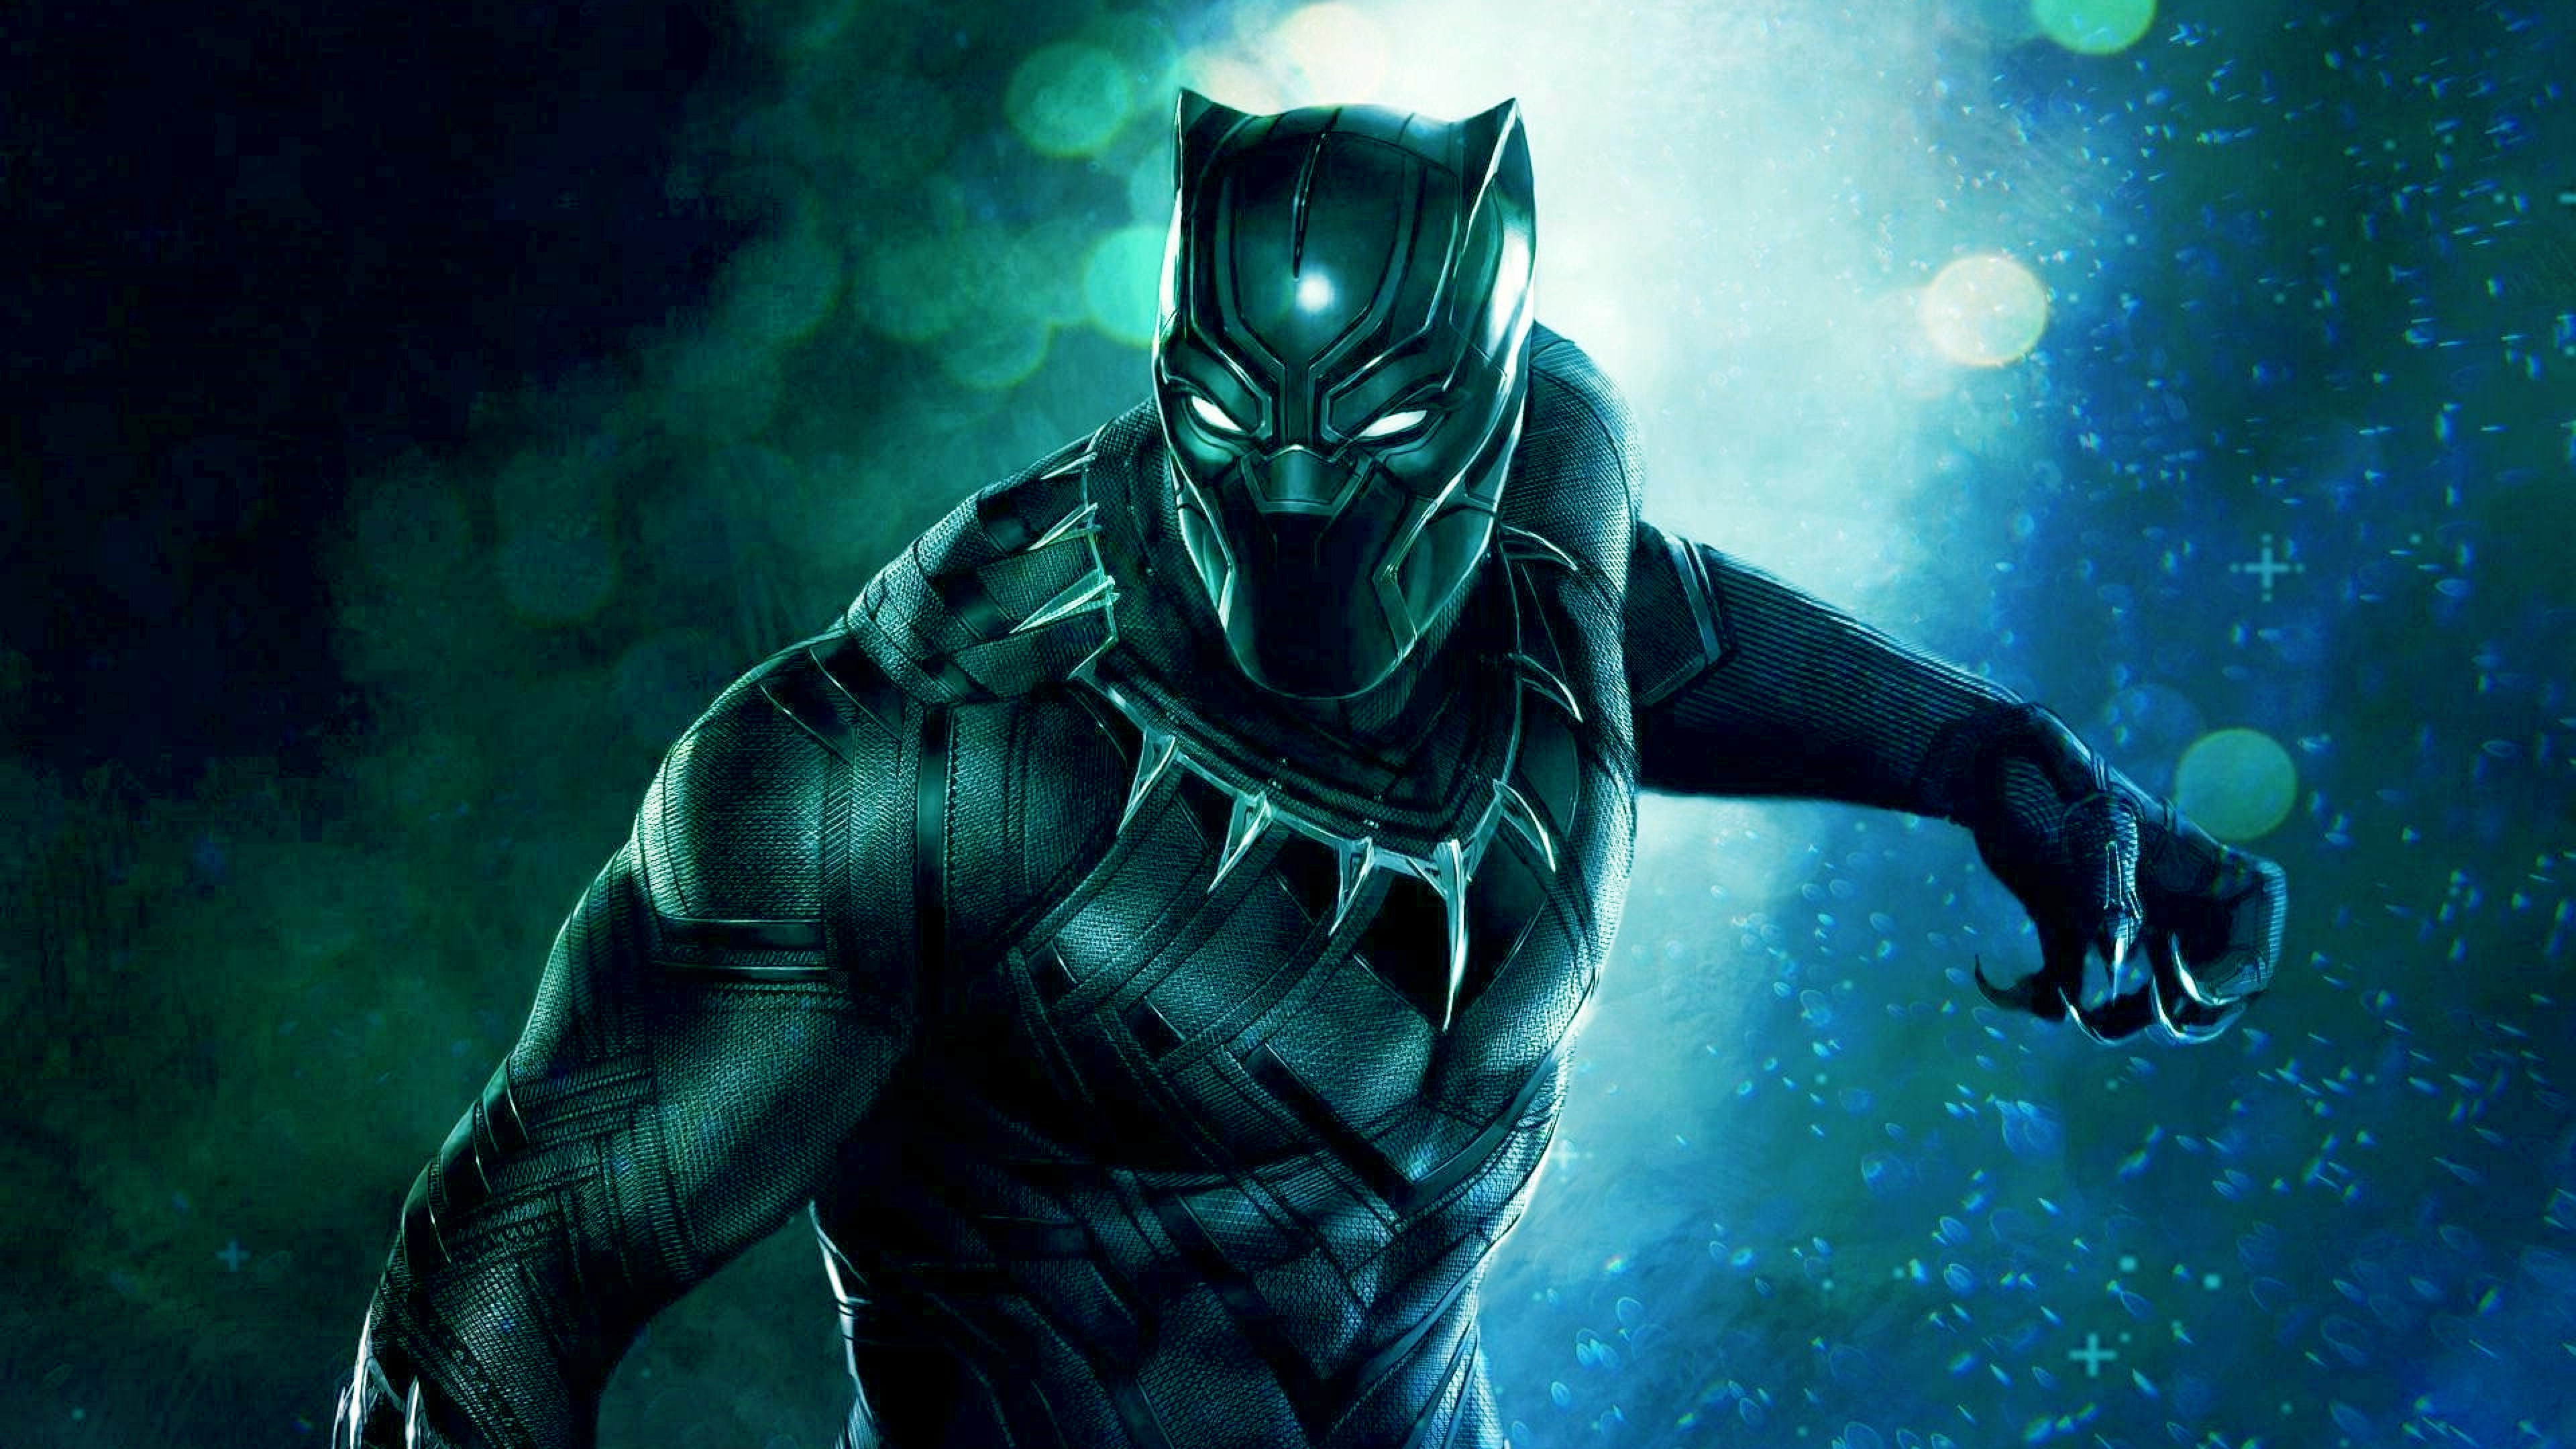 black panther hd wallpaper,fictional character,batman,superhero,justice league,cg artwork